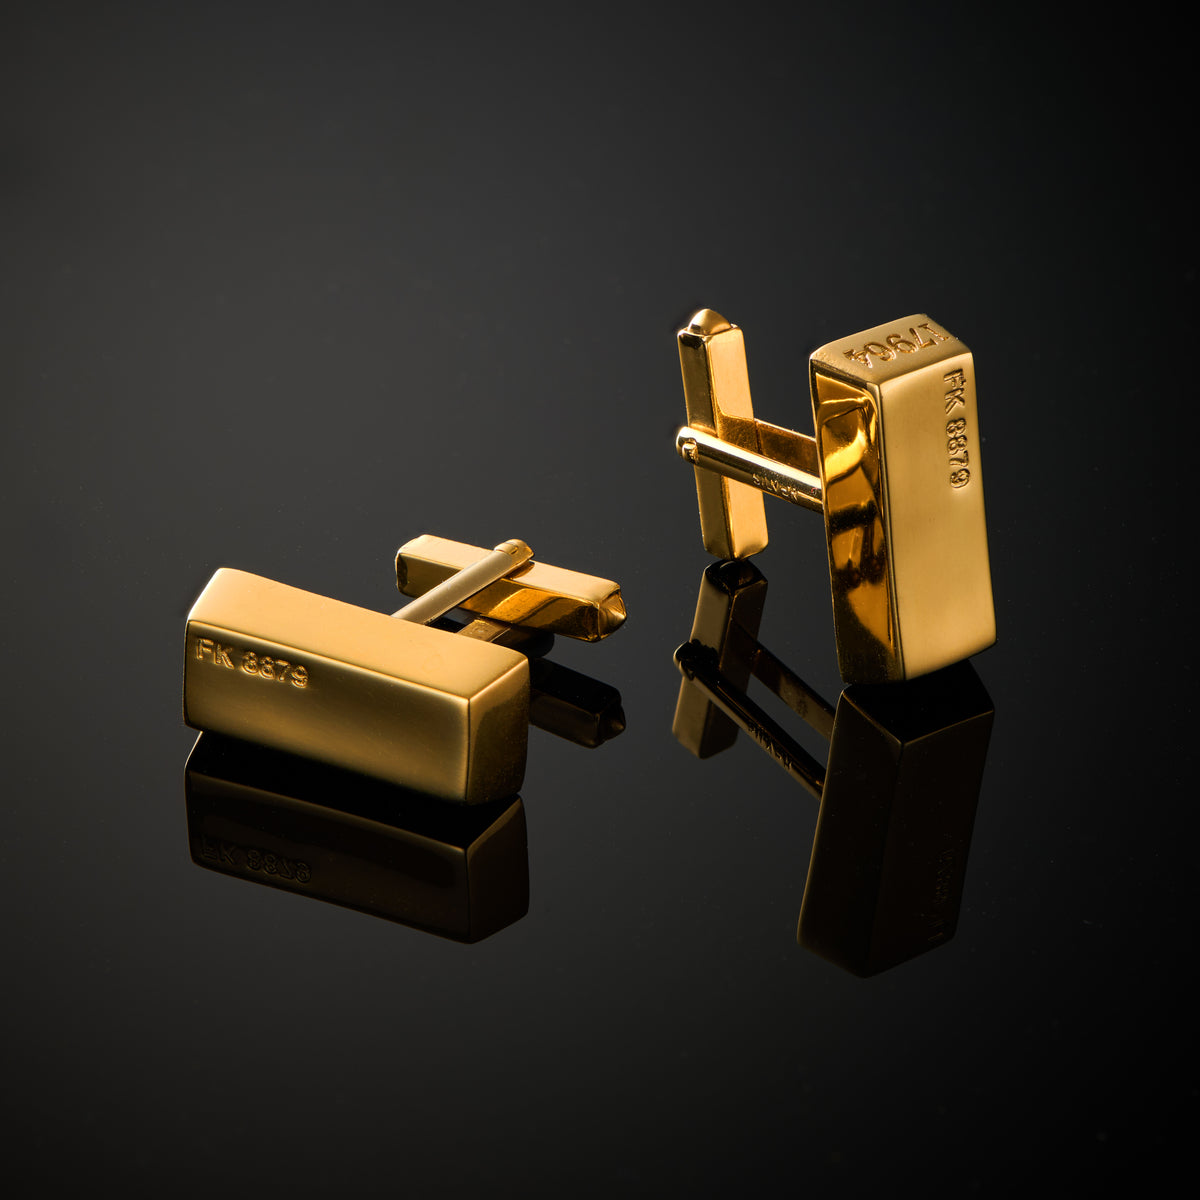 James Bond 18ct Gold Bullion Bar Cufflinks - Goldfinger Edition